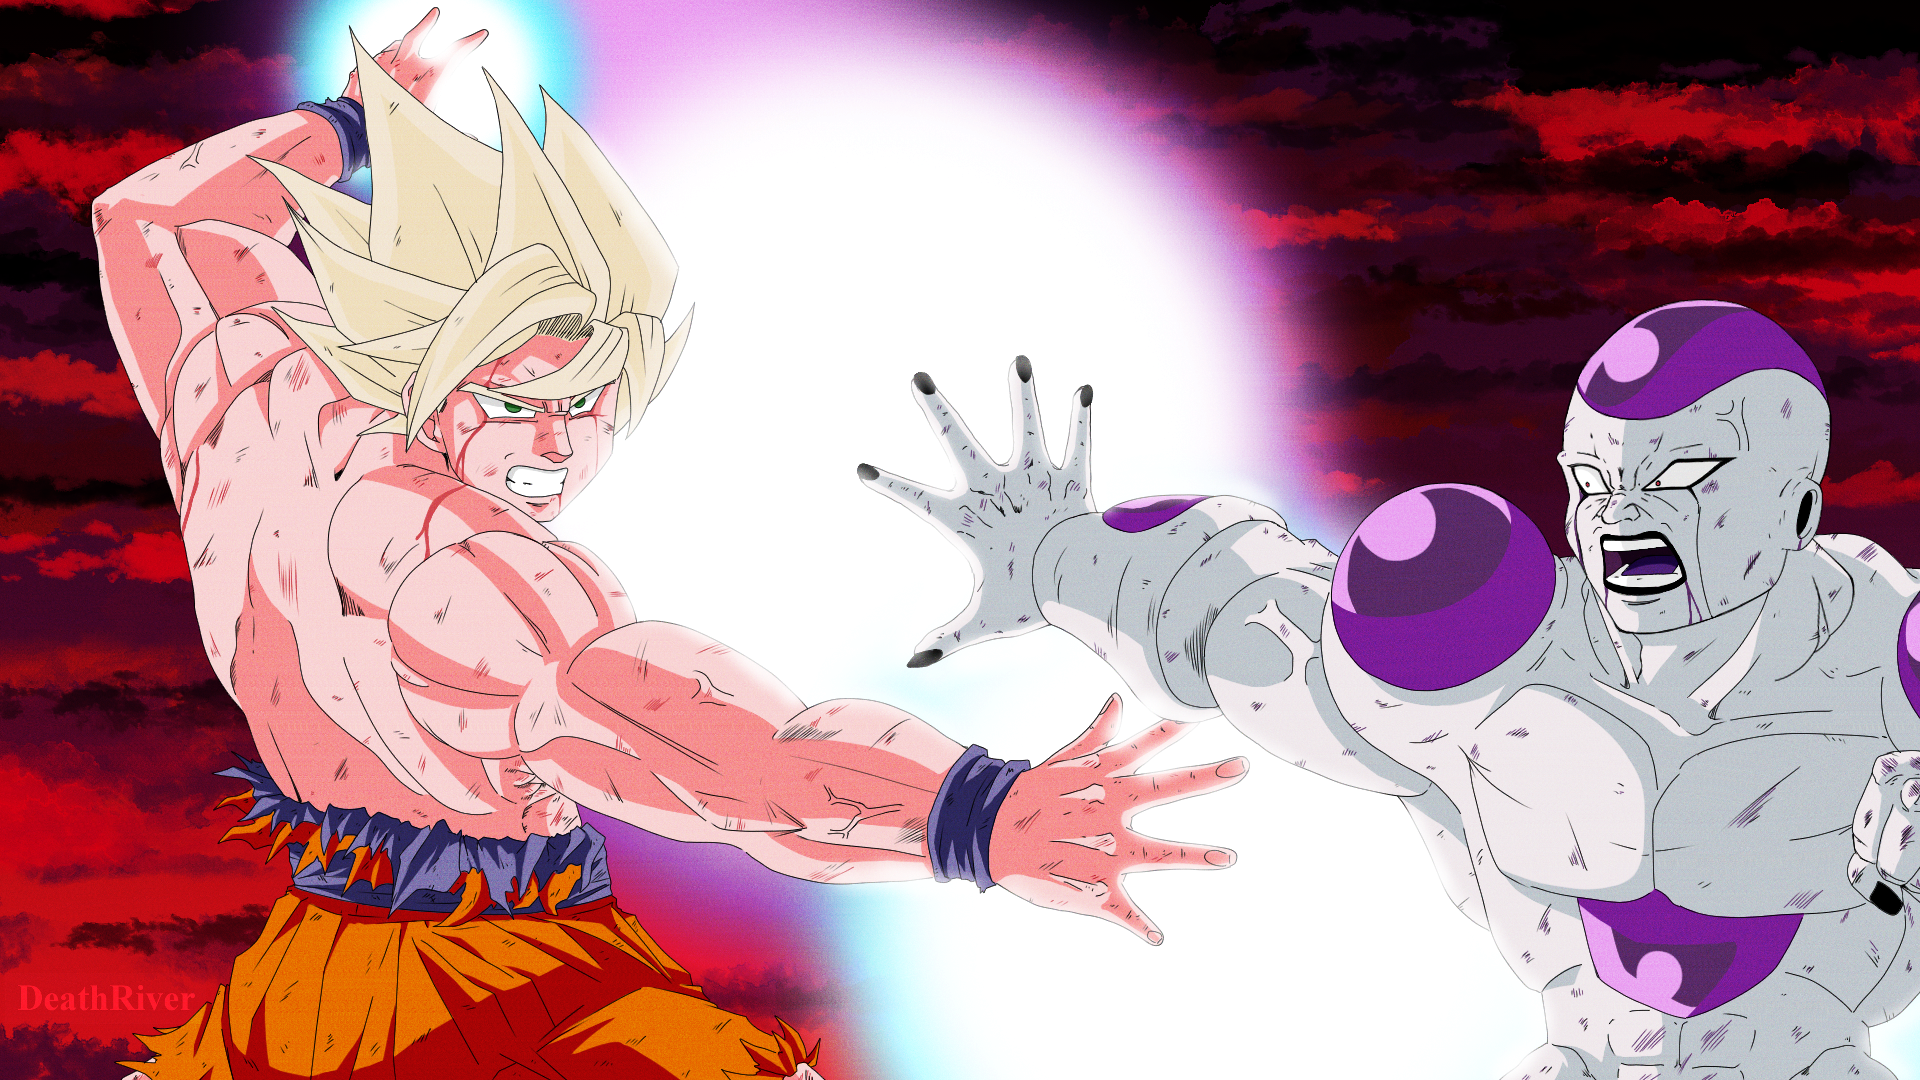 Goku VS Freezer by BDeathRiver on DeviantArt